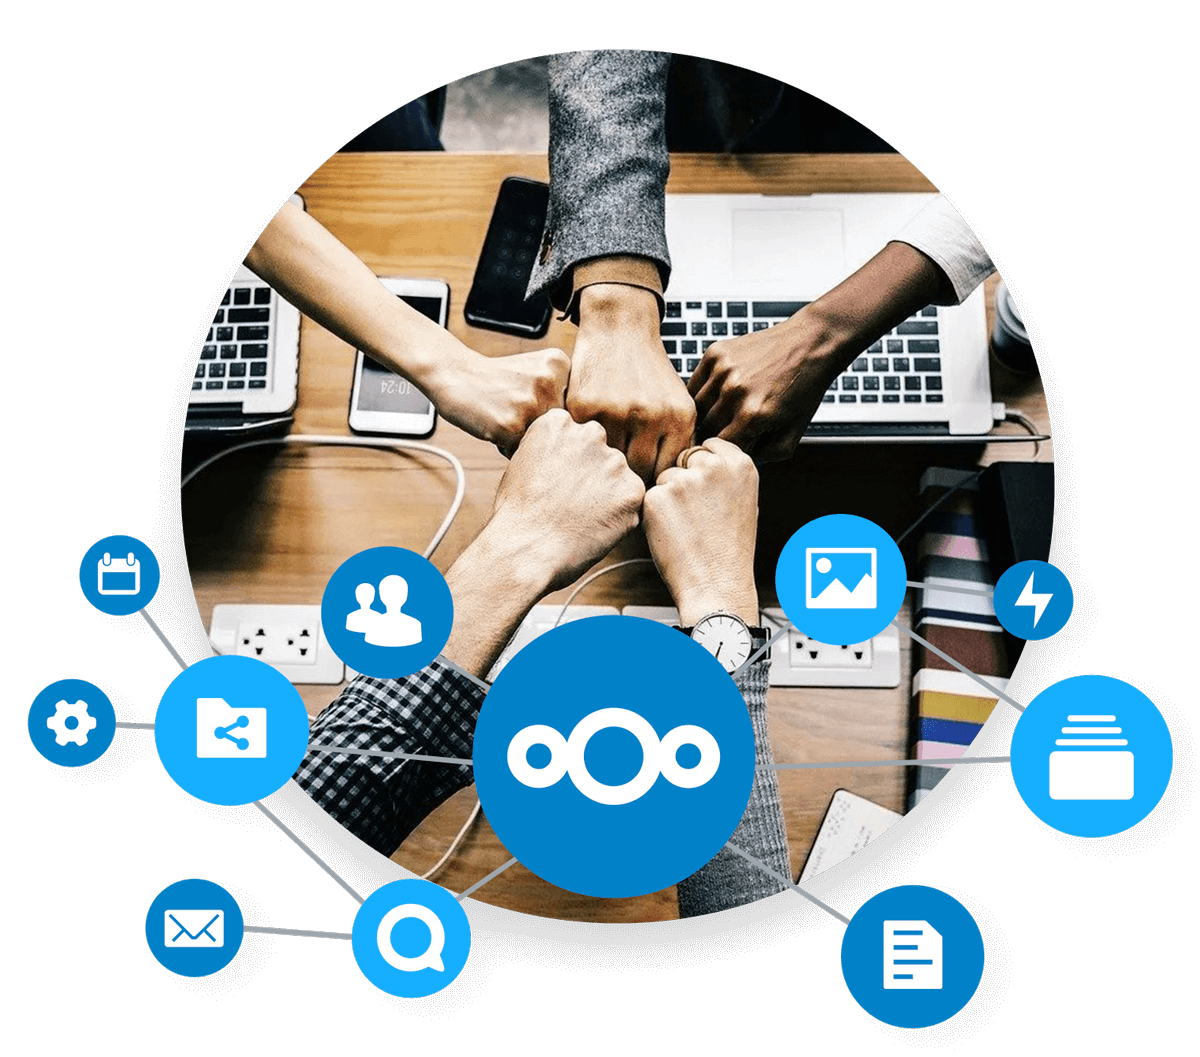 Nextcloud - sharing and collaboration cloud storage